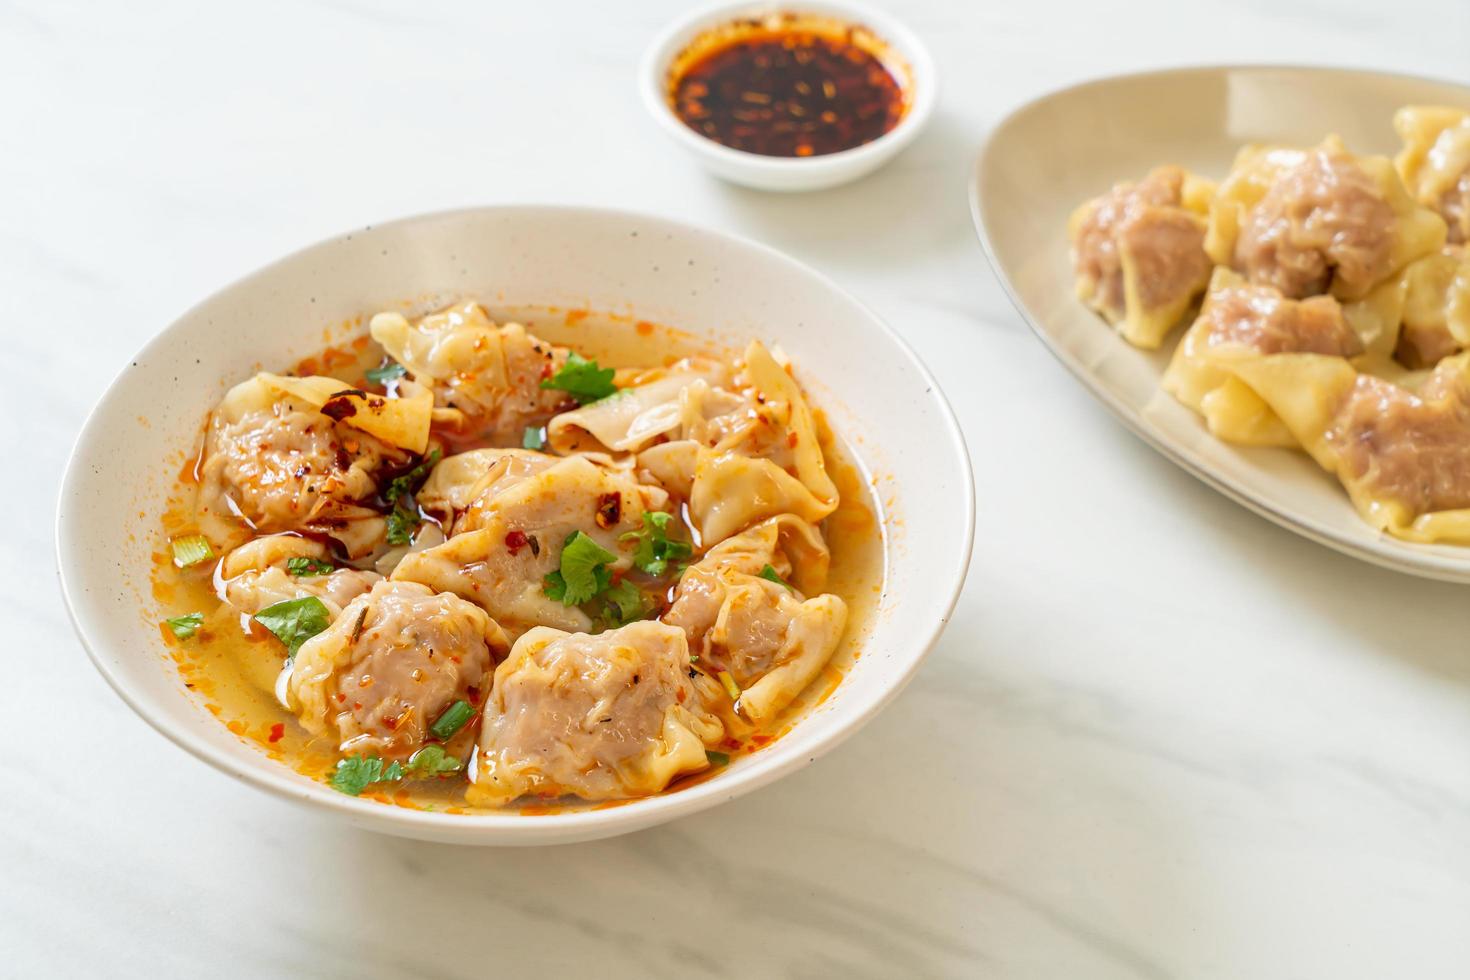 Pork wonton soup or pork dumplings soup with roasted chili - Asian food style photo